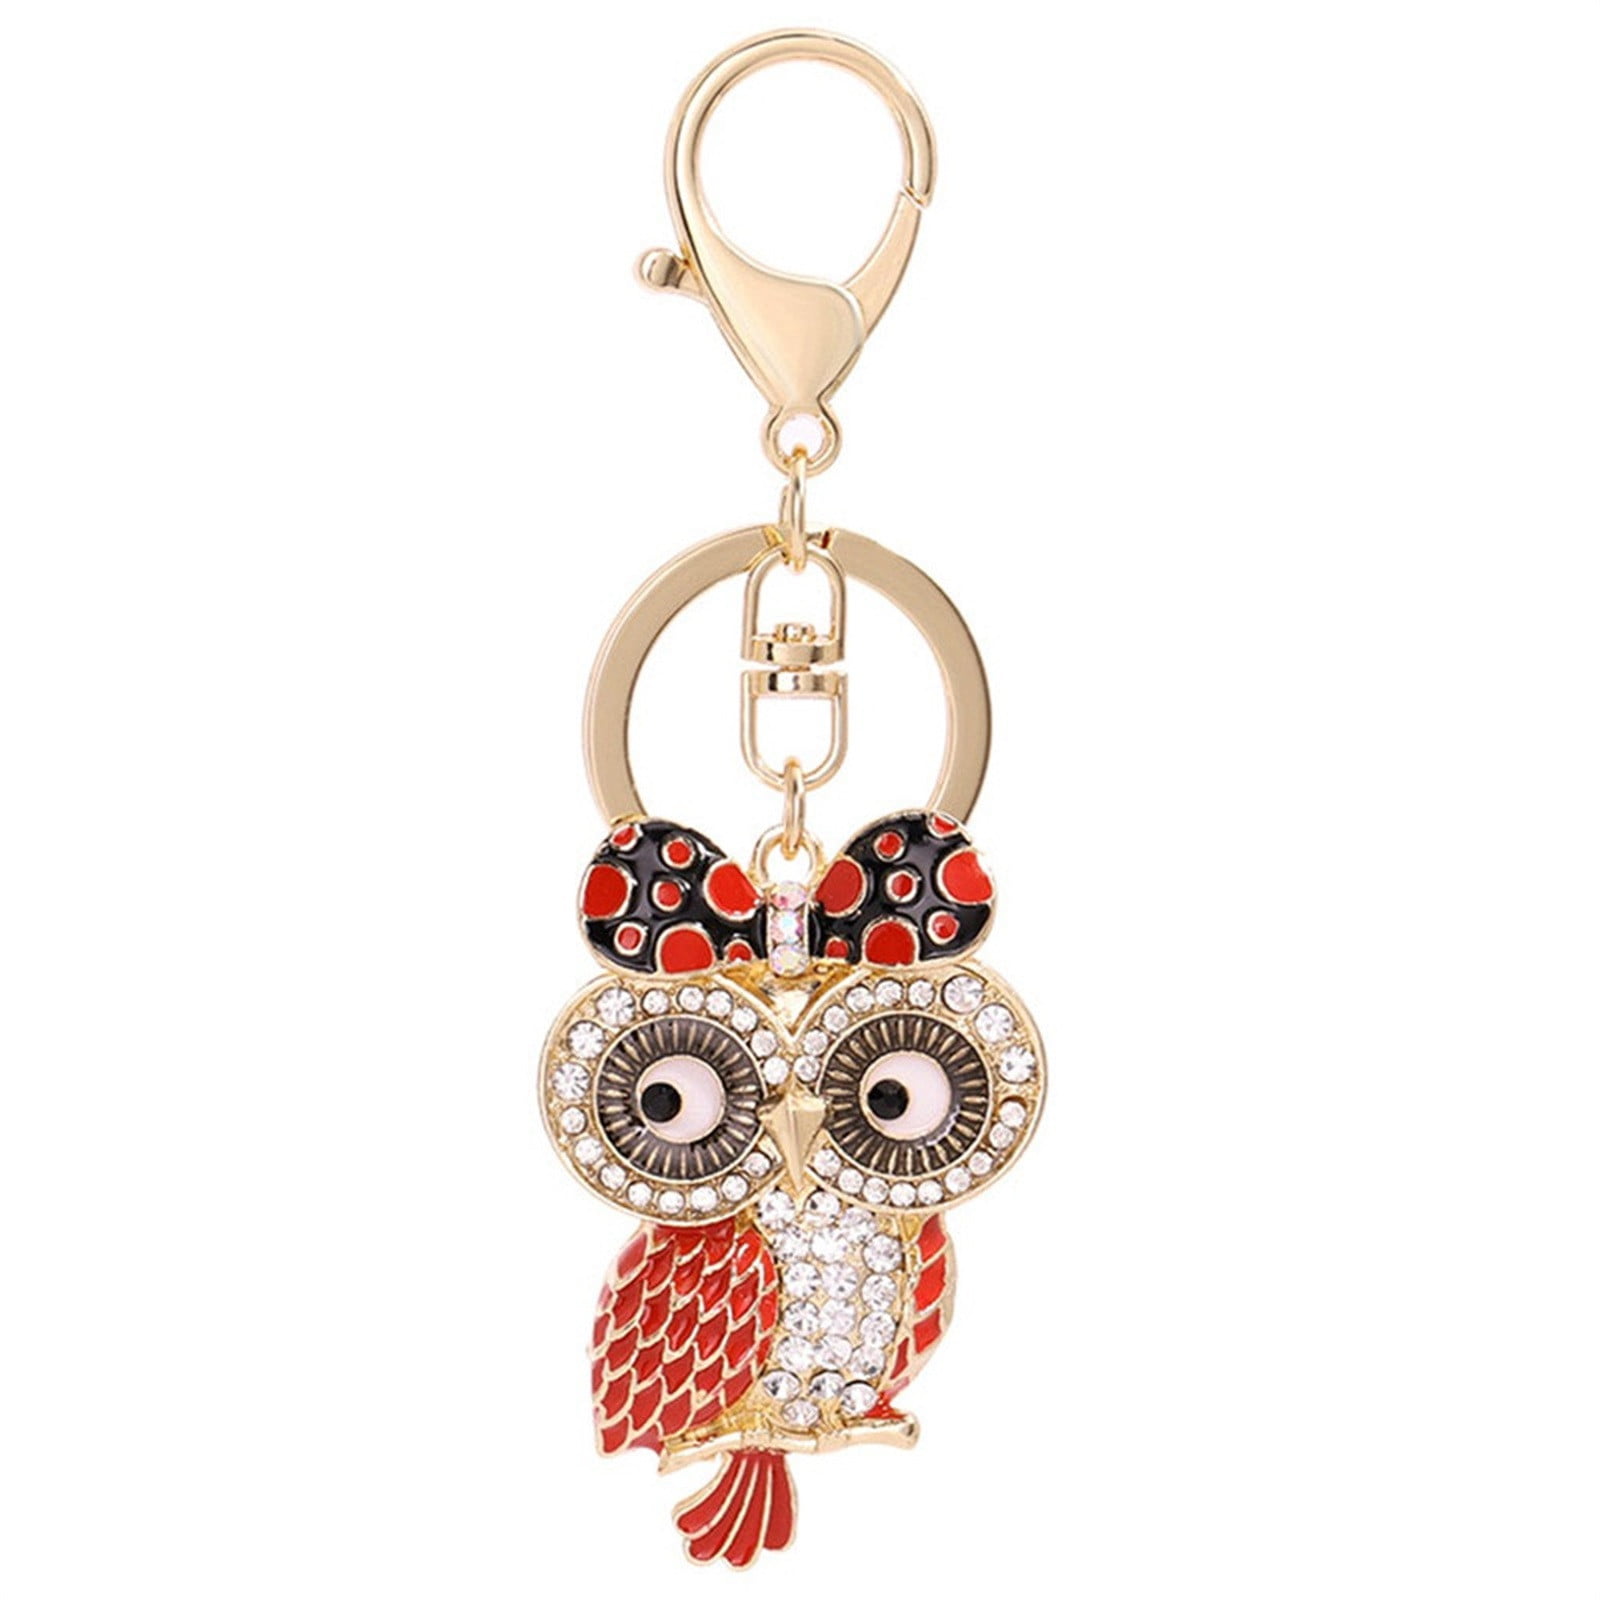 Creative Bule Eyes Lovely Owl Charm Pendant Crystal Purse Bag Car Key Ring Chain 